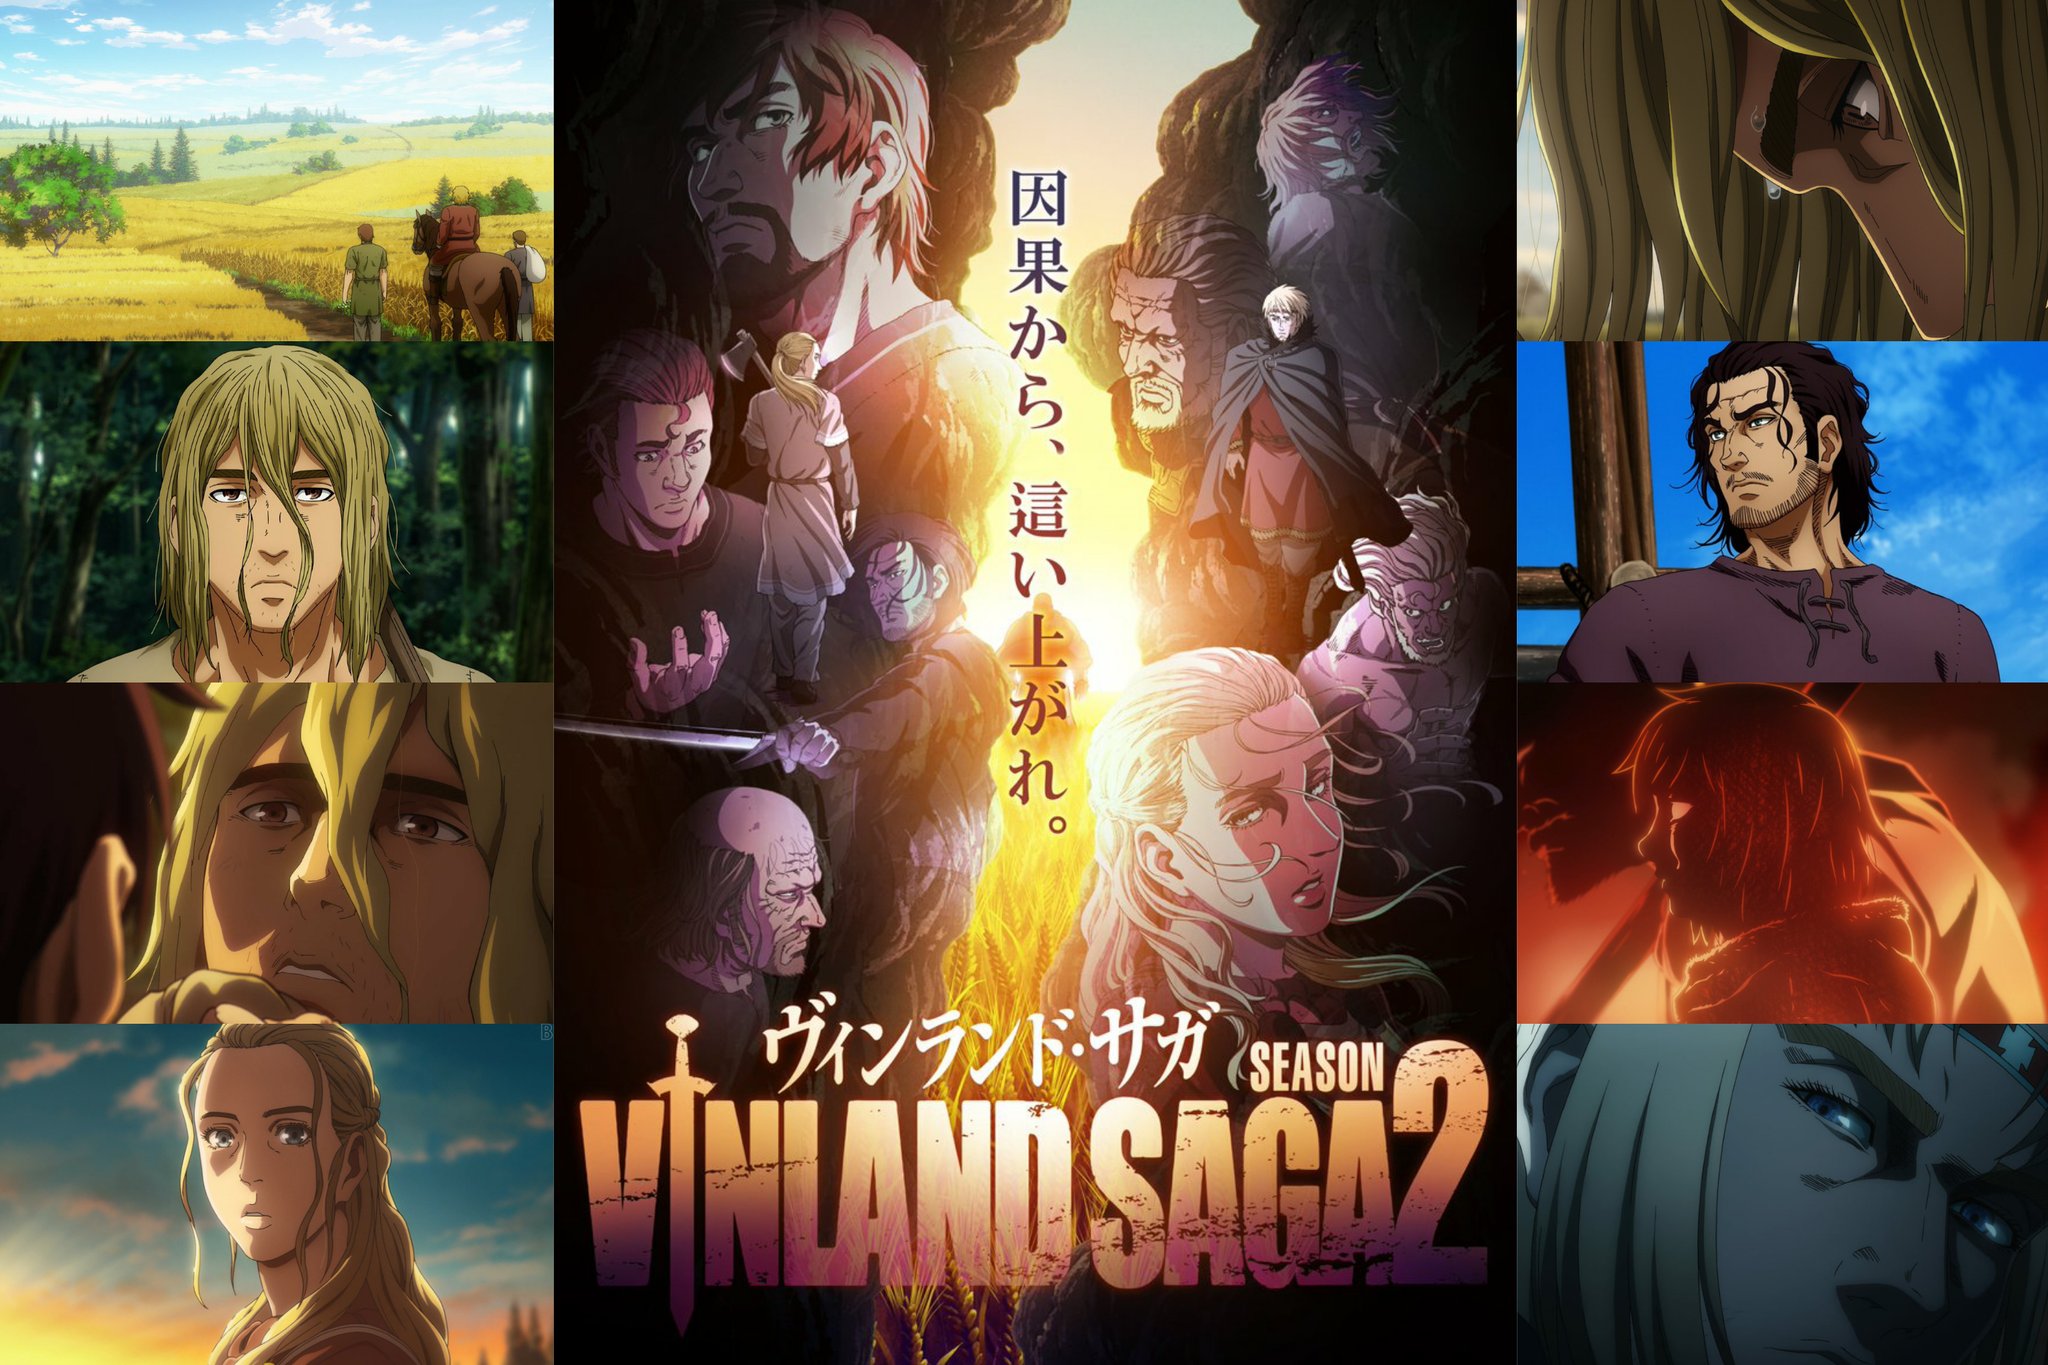 Second season of Vinland Saga will be available on Netflix